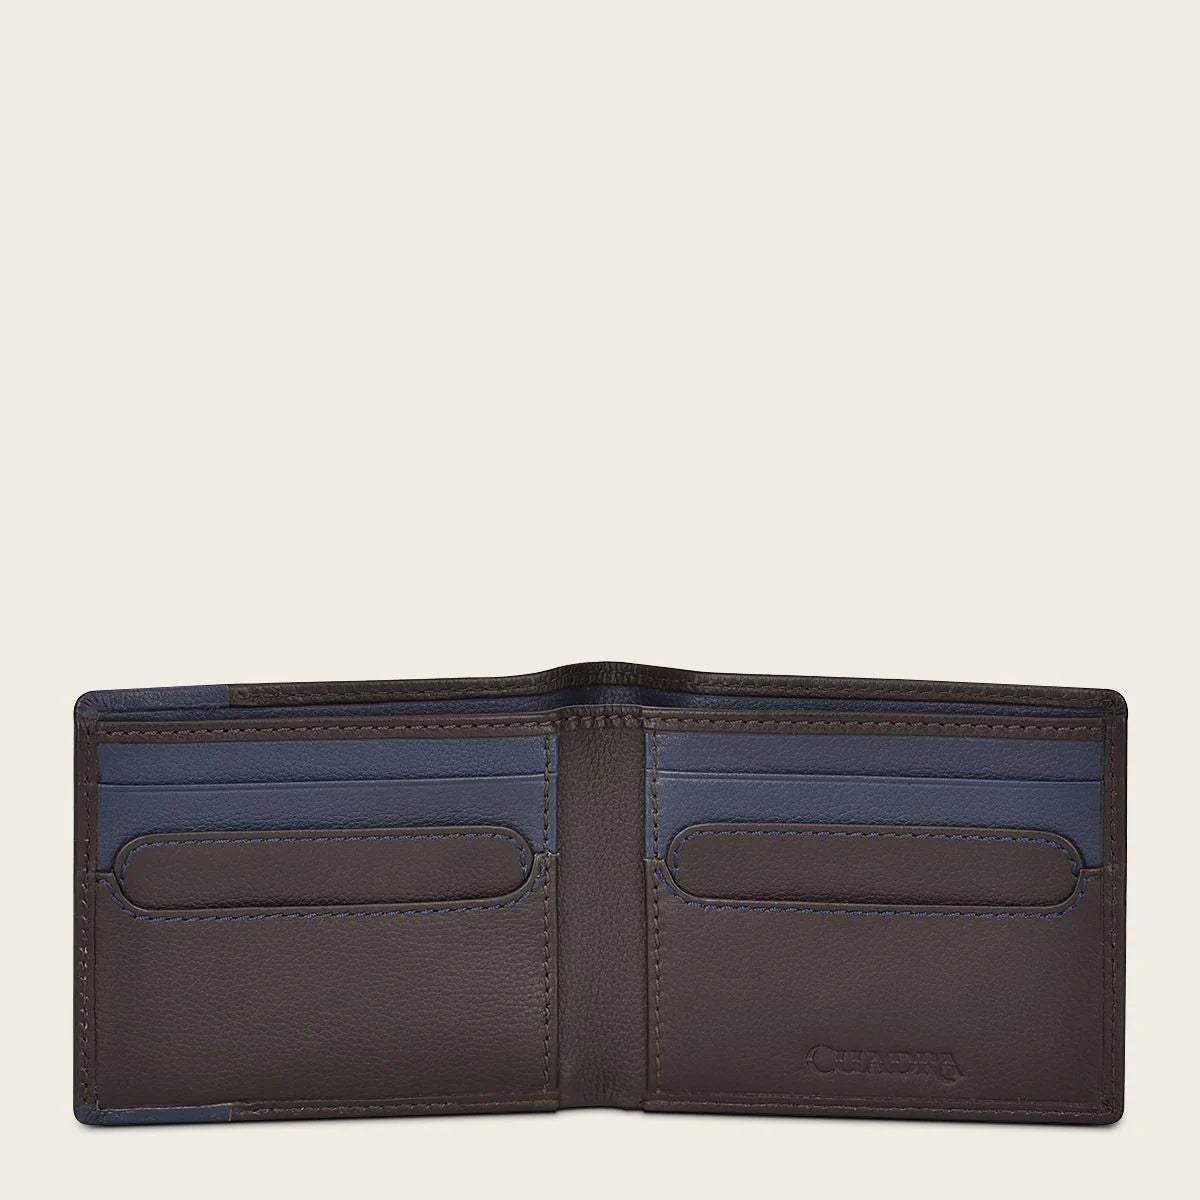 Brown bovine leather wallet with Cuadra monogram